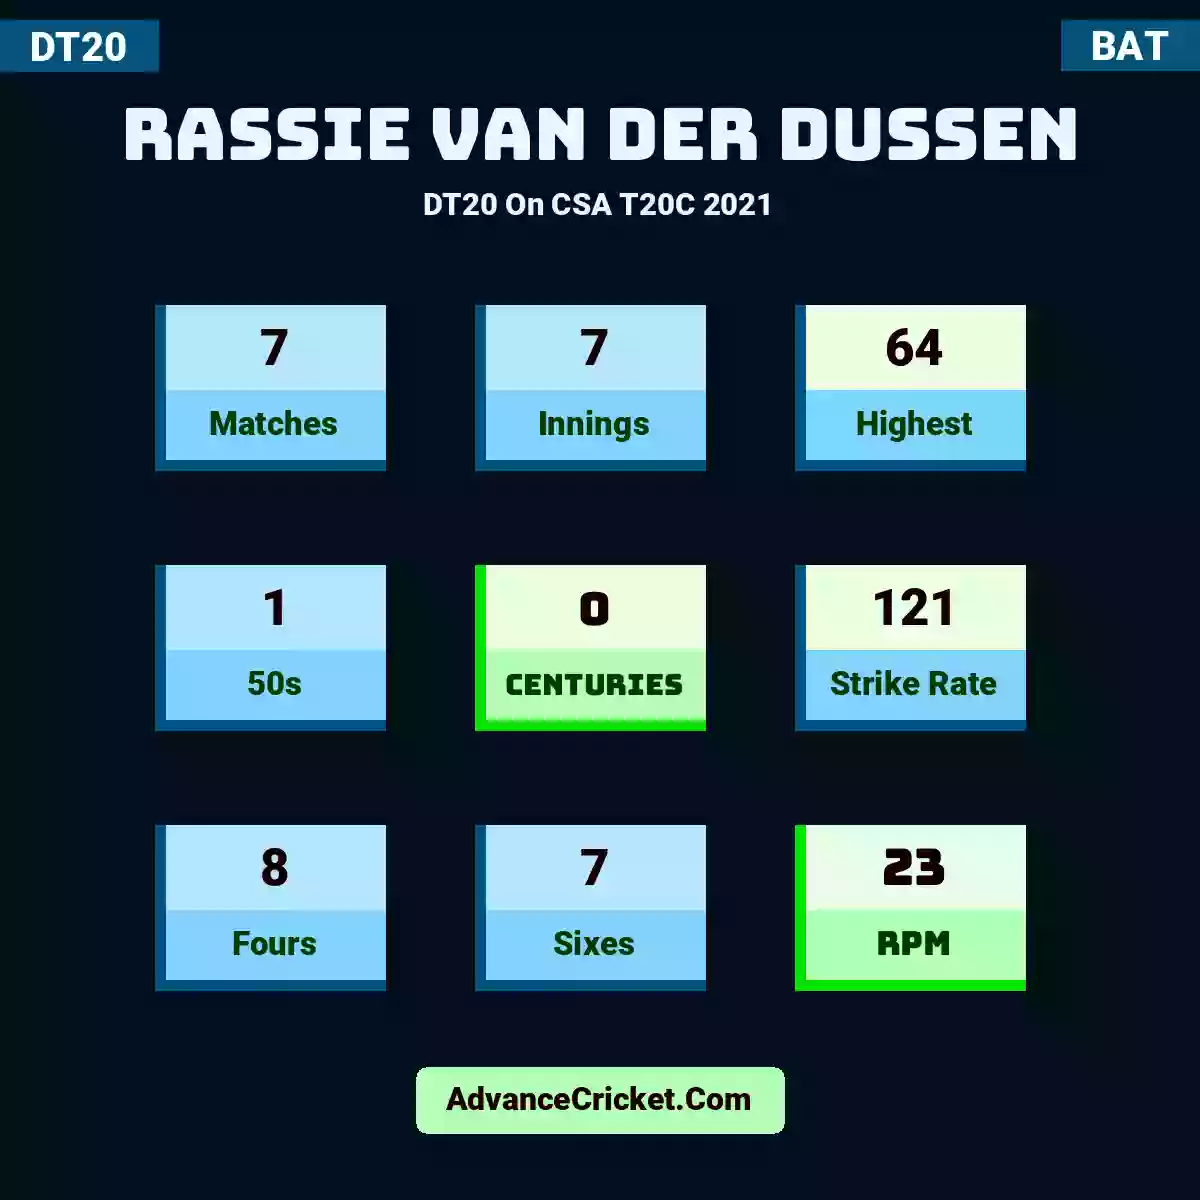 Rassie van der Dussen DT20  On CSA T20C 2021, Rassie van der Dussen played 7 matches, scored 64 runs as highest, 1 half-centuries, and 0 centuries, with a strike rate of 121. R.Dussen hit 8 fours and 7 sixes, with an RPM of 23.